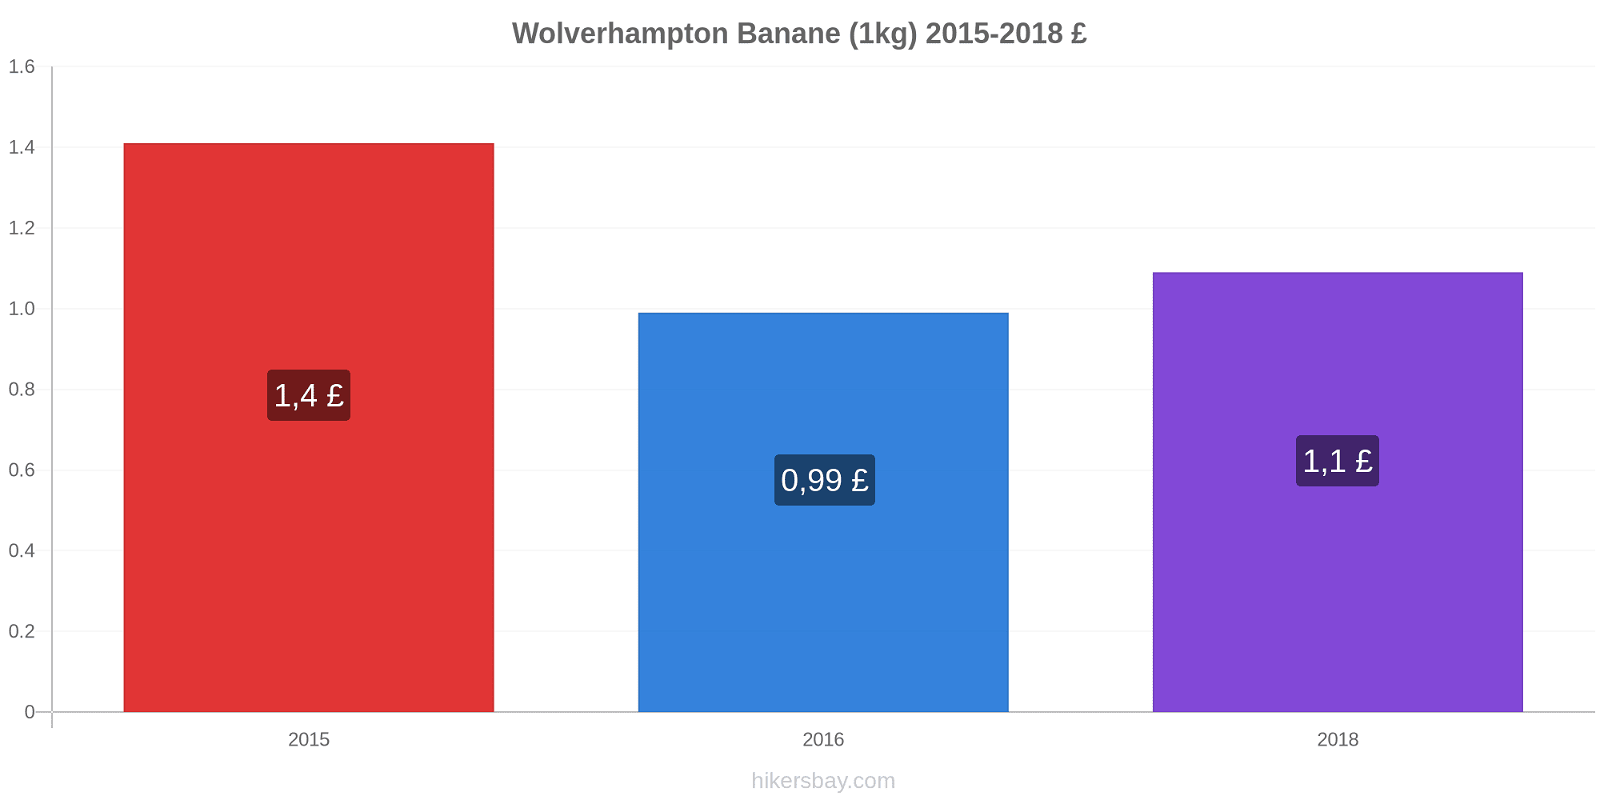 Wolverhampton Preisänderungen Banane (1kg) hikersbay.com